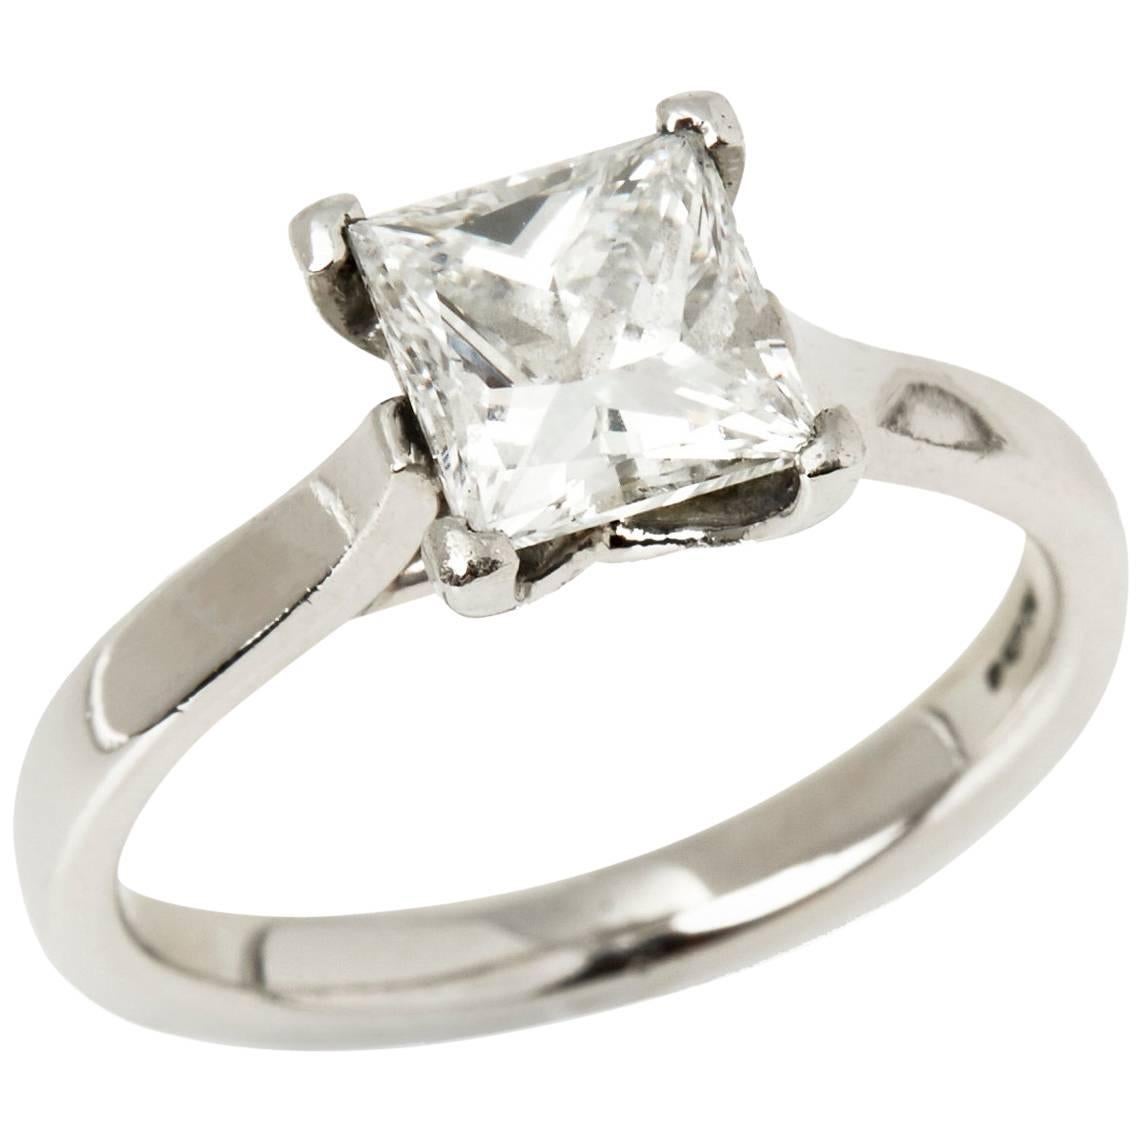 Platinum Princess Cut 1.89 Carat Diamond Solitaire Engagement Ring